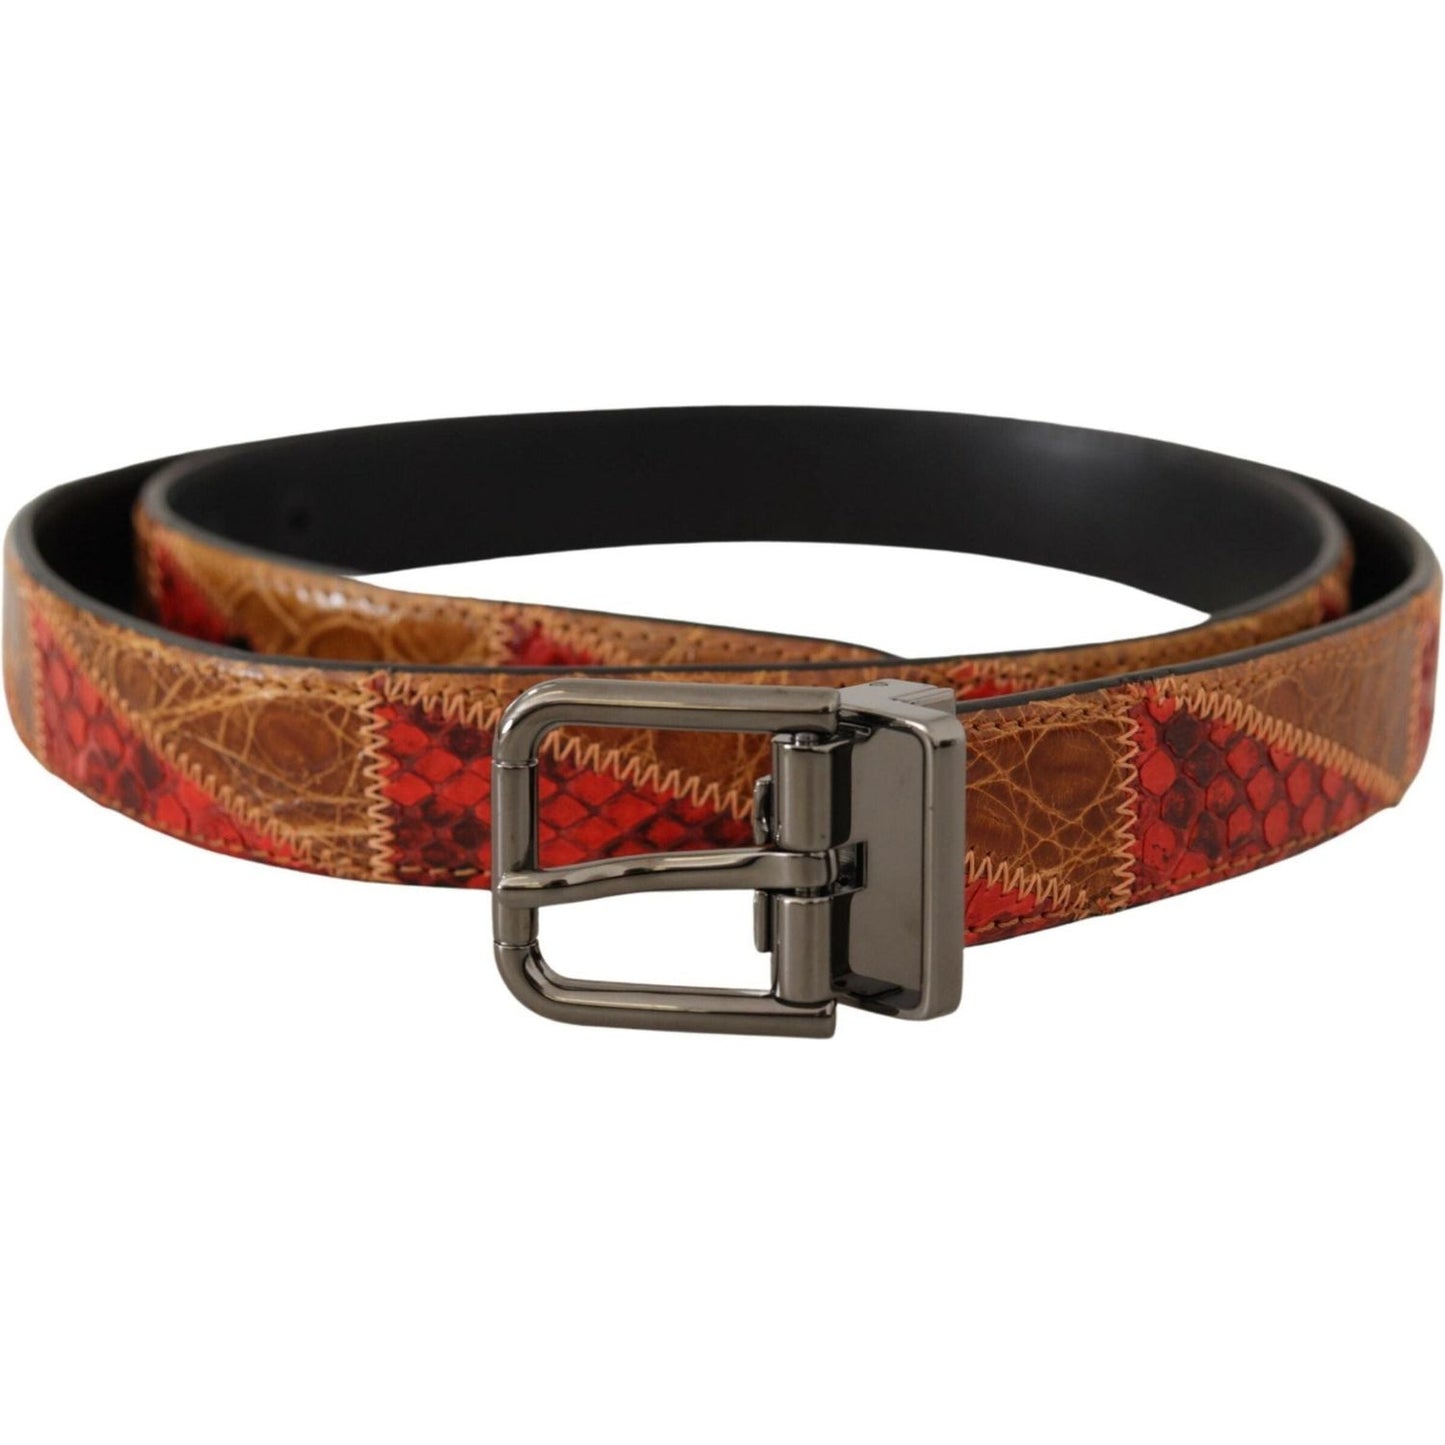 Elegant Two-Tone Snakeskin Leather Belt